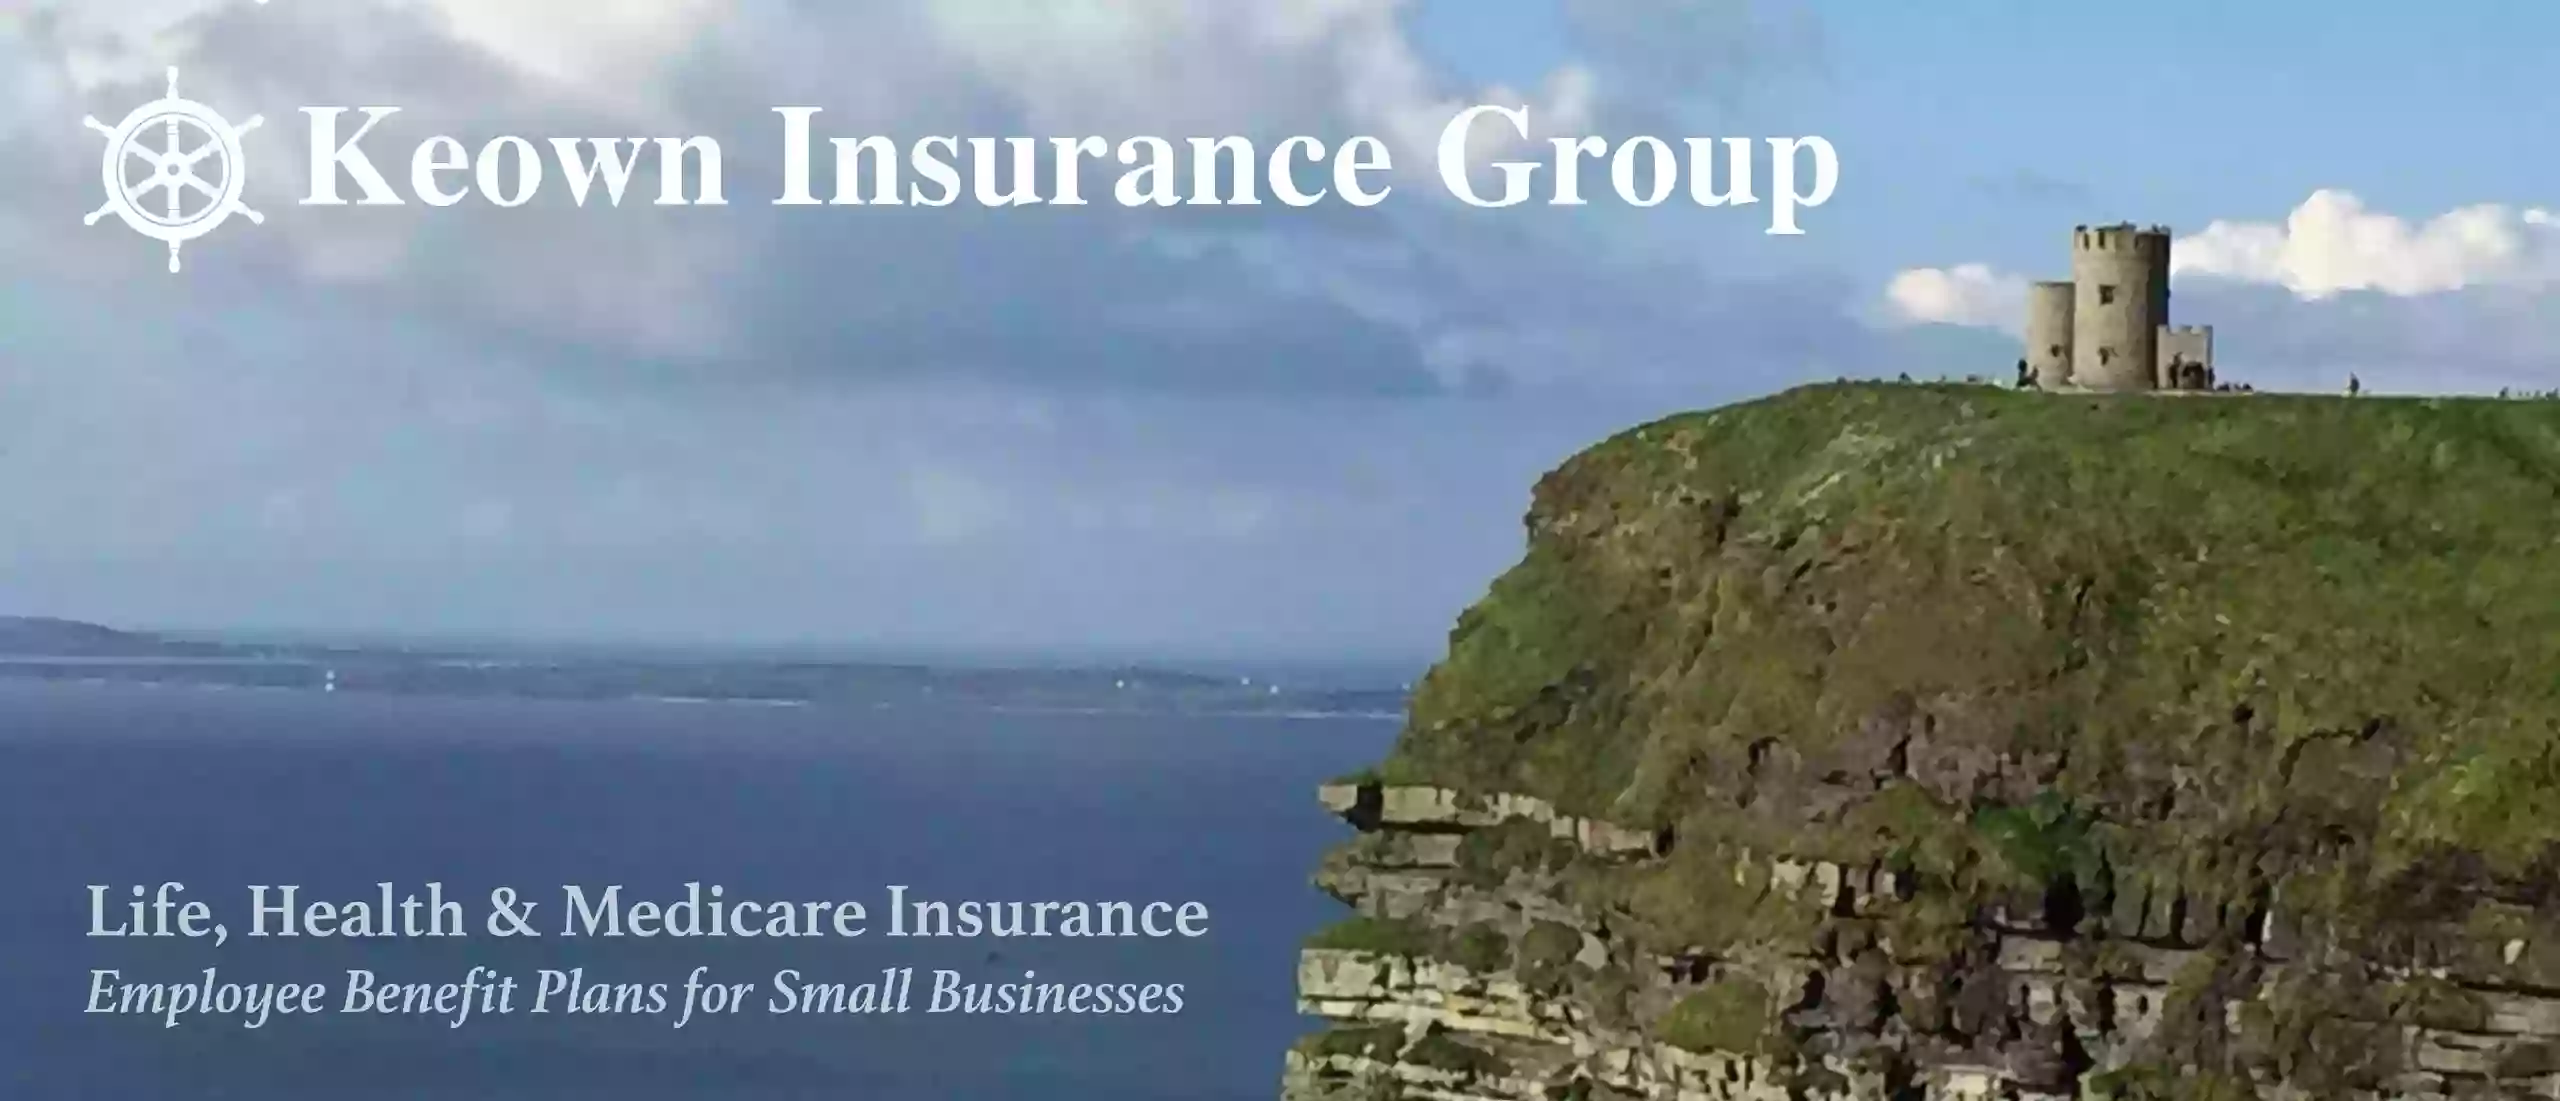 Keown Insurance Group